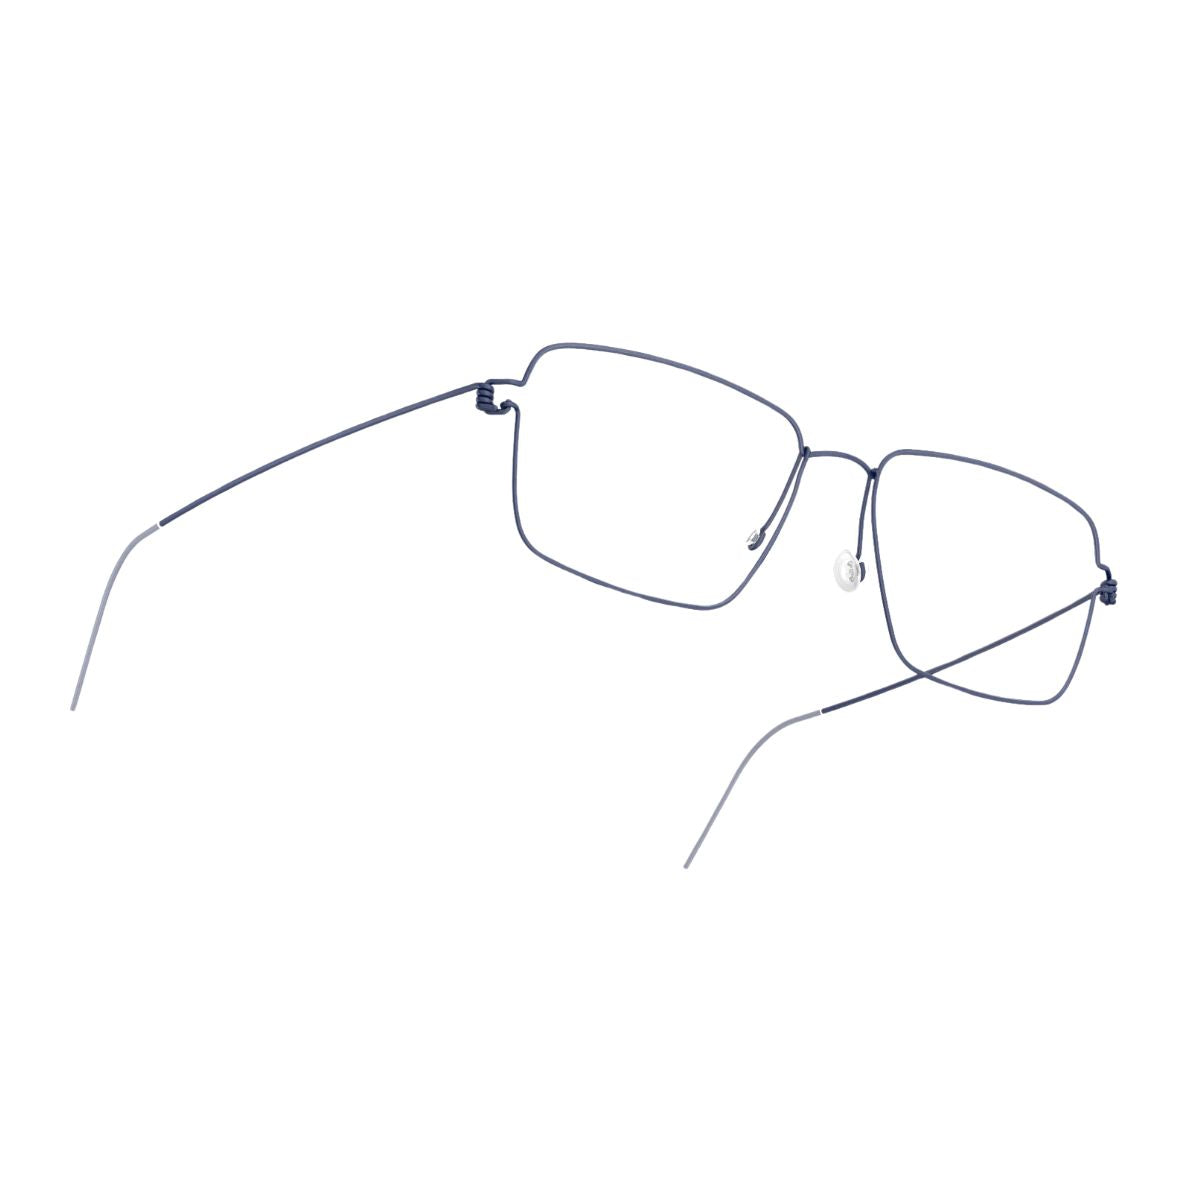 "Shop Trendy Glasses For Men & Women From Lindberg AARON Eyewear At Optorium"